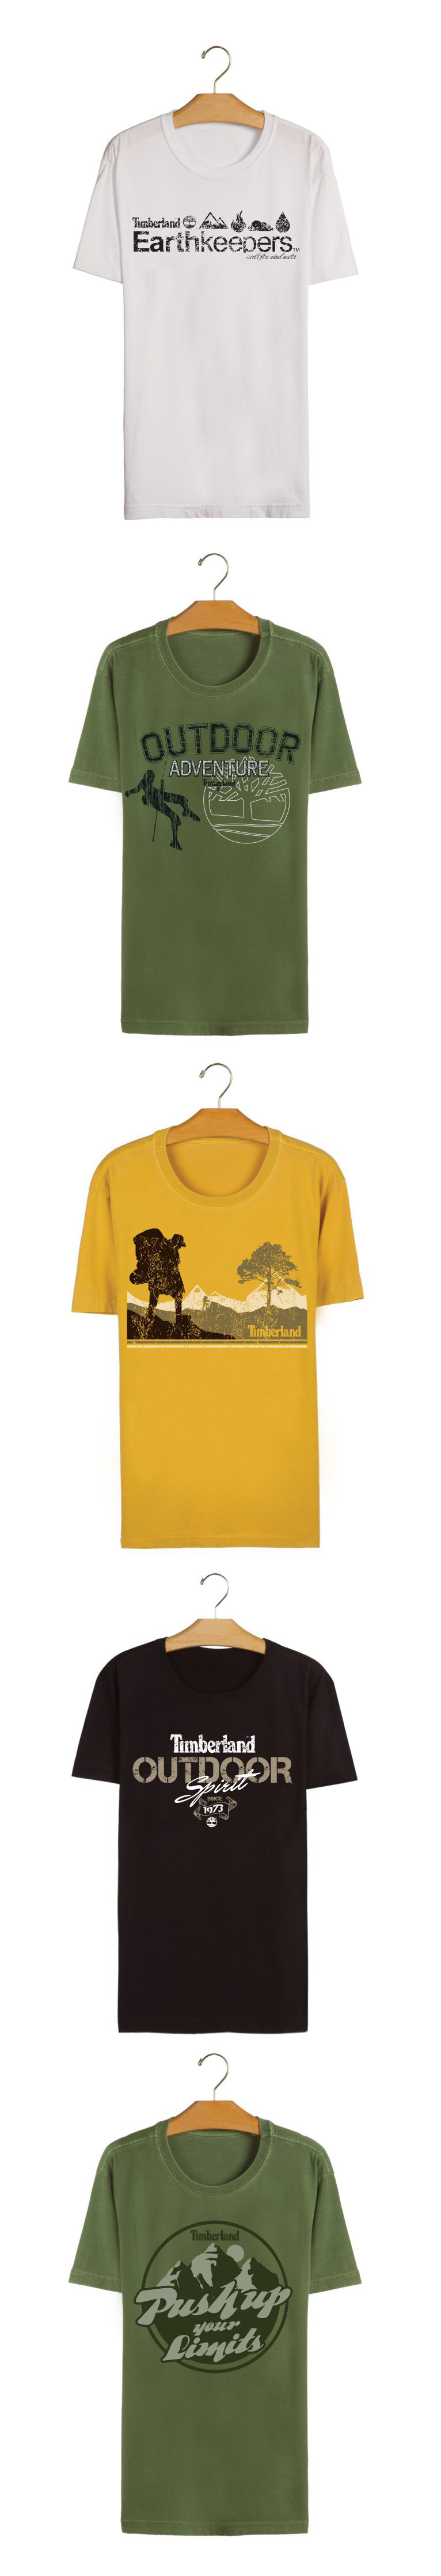 timberland brand illustrations art silkscreen Nature TIMBER tshirt tee t-shirt graphic Outdoor hiking wild